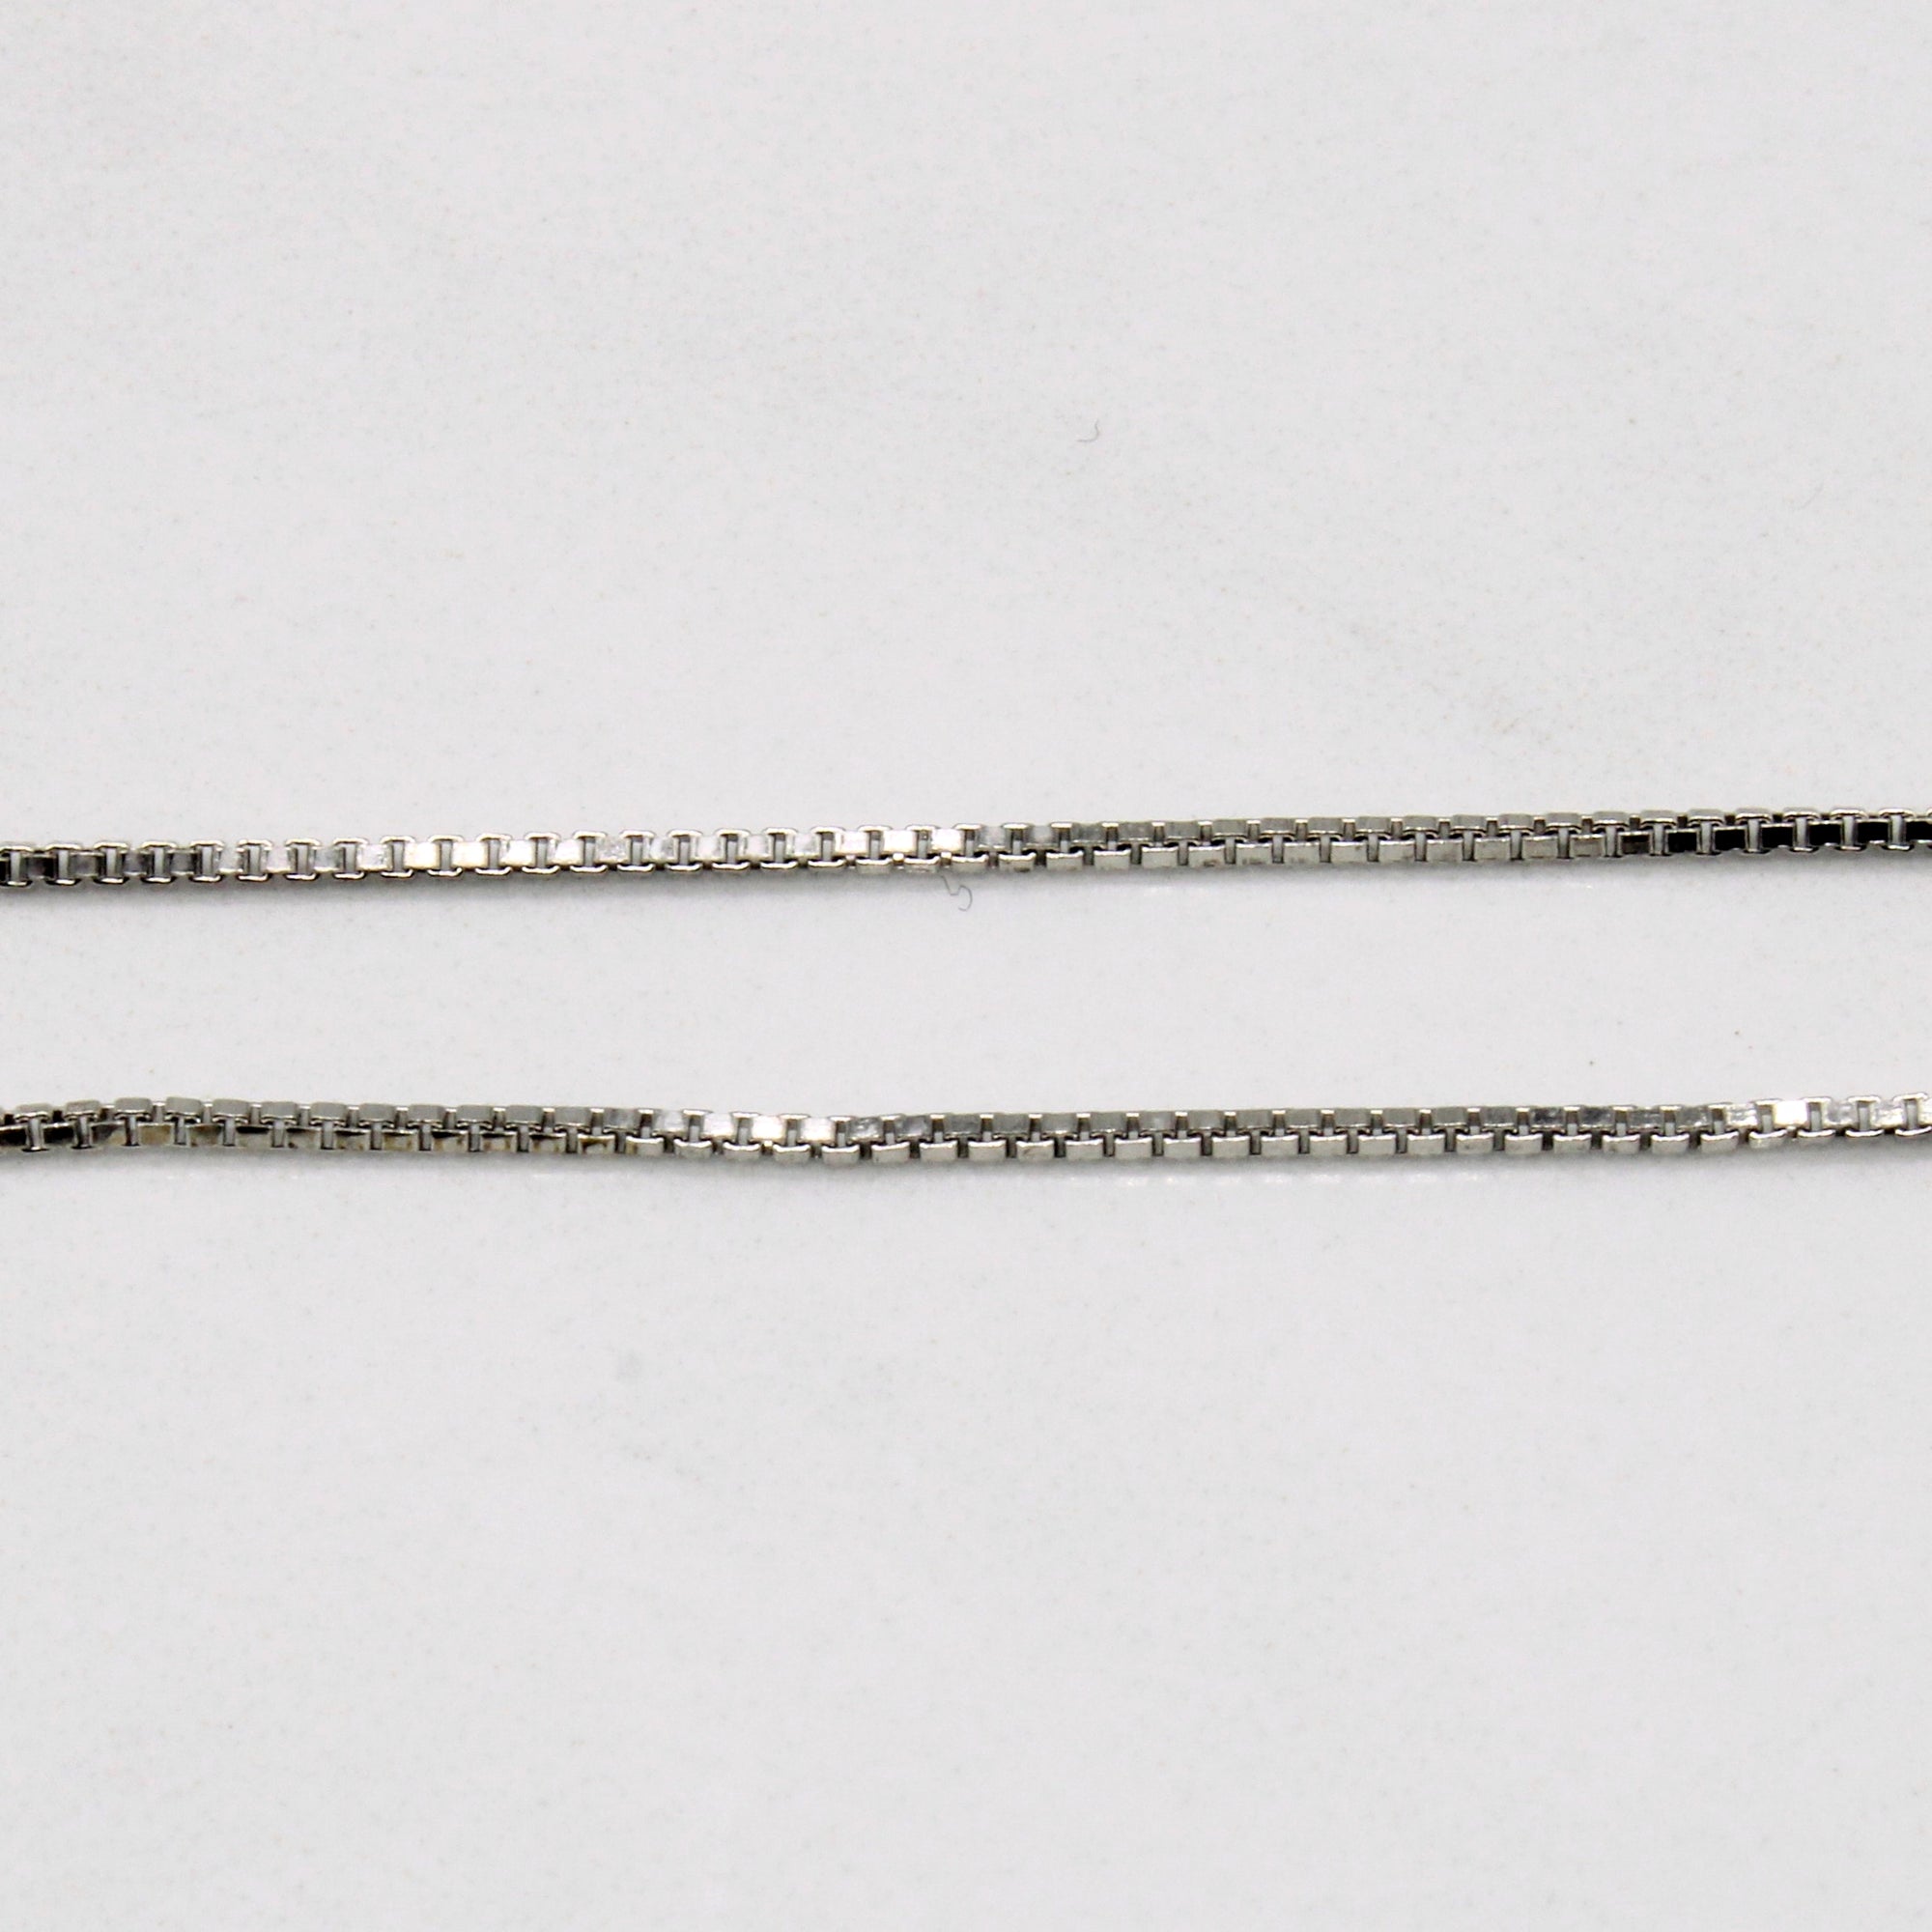 Diamond Compass Pendant & Necklace | 0.12ct | 18